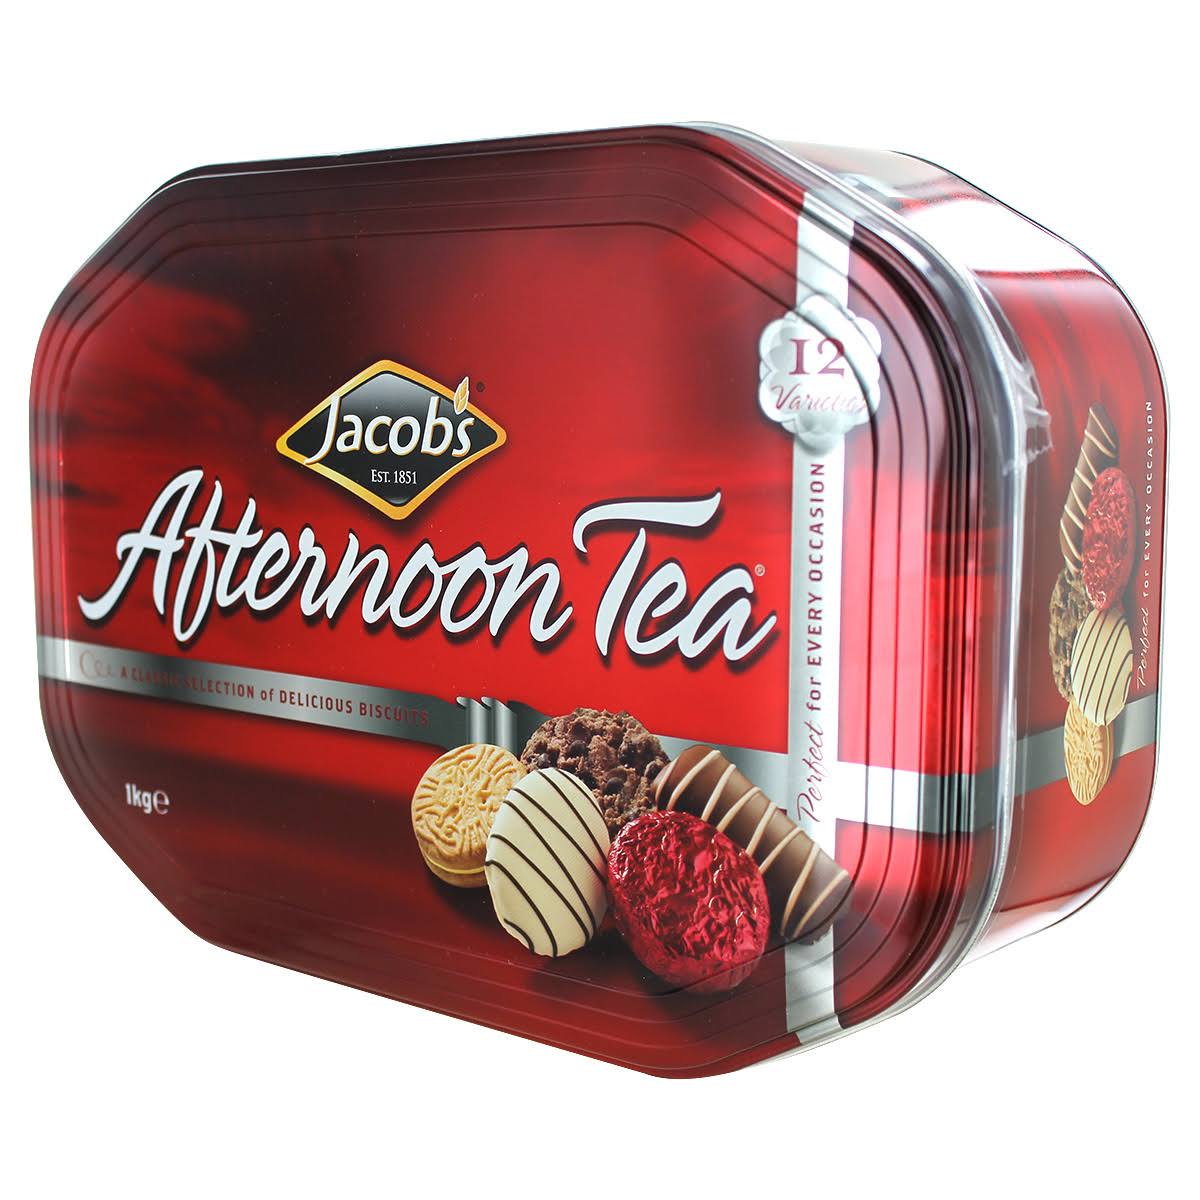 Jacobs Afternoon Tea Biscuits